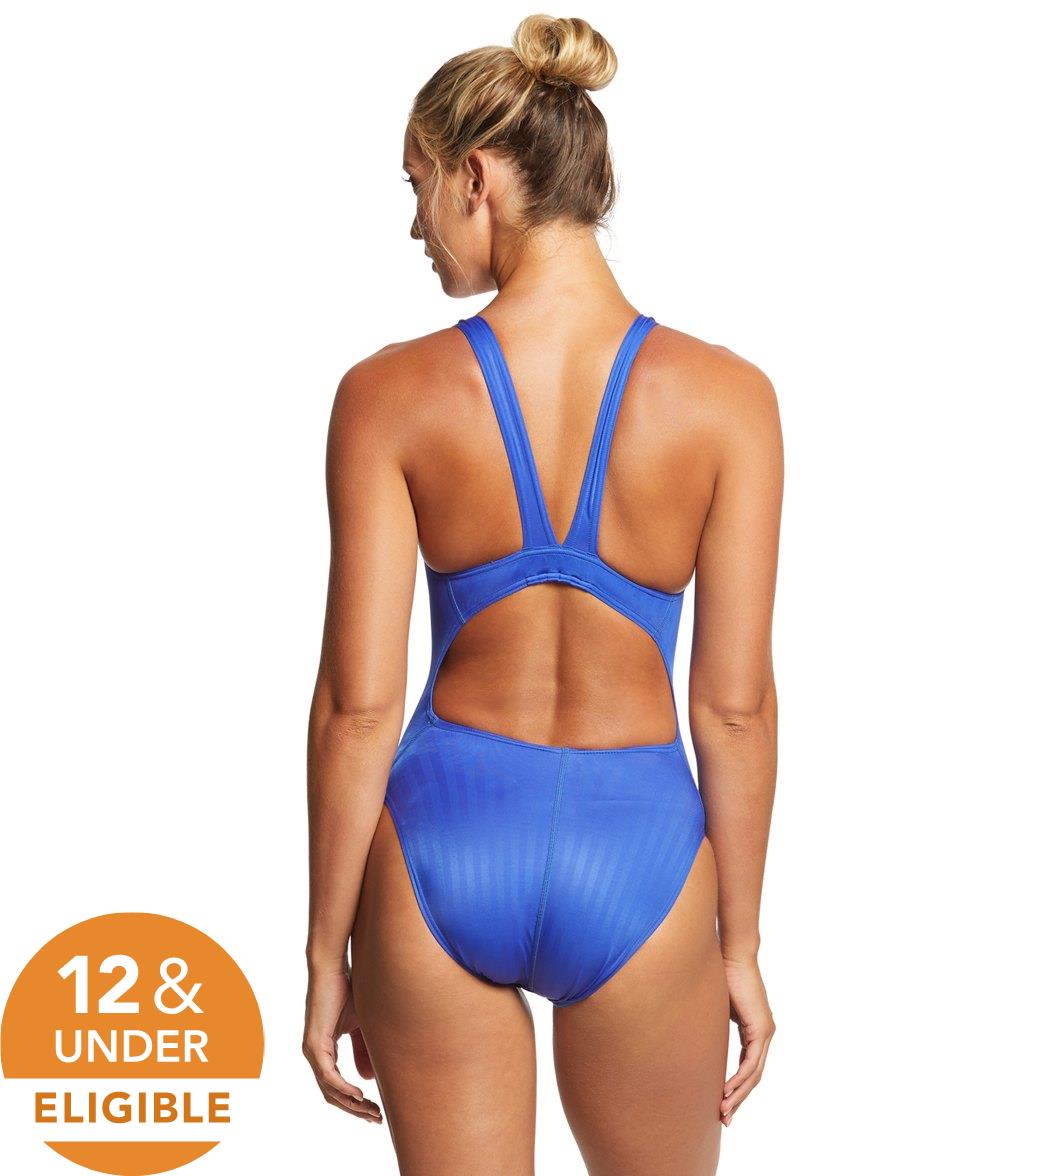 Speedo Women's Aquablade Recordbreaker Tech Suit Swimsuit at 